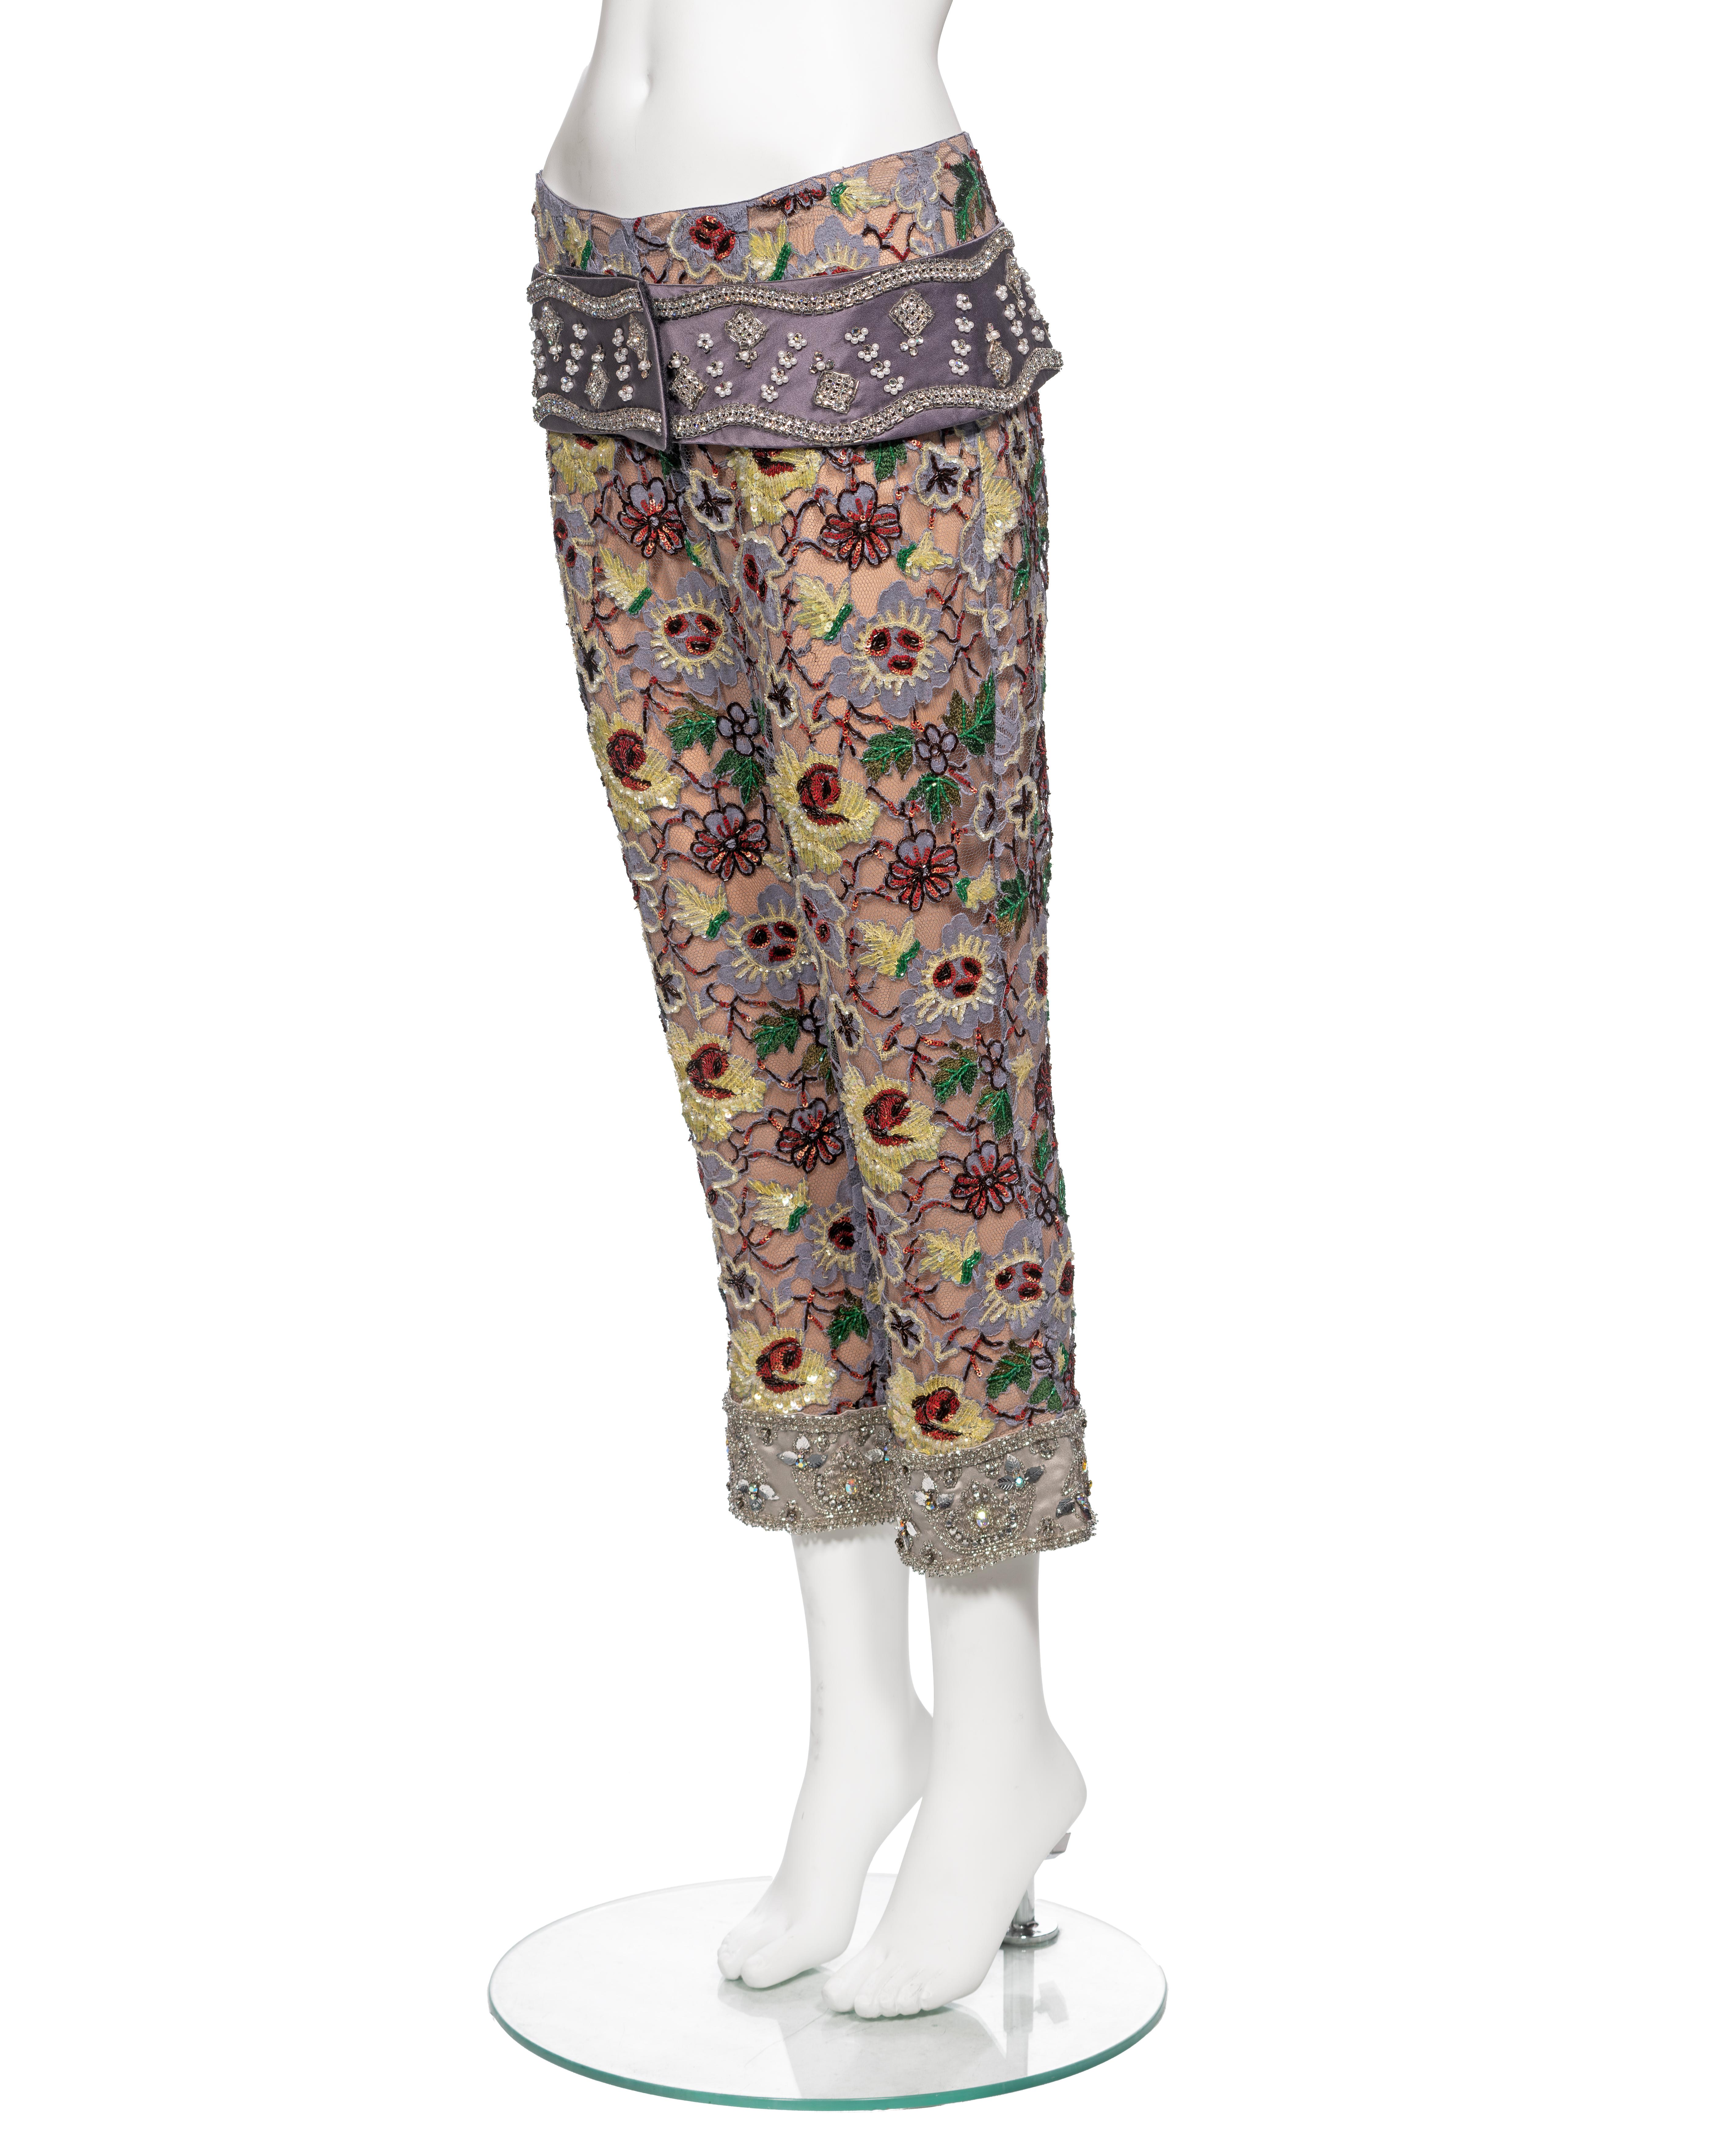 Dolce & Gabbana Embellished Lace Capri Pants and Belt Set, FW 1999 For Sale 8